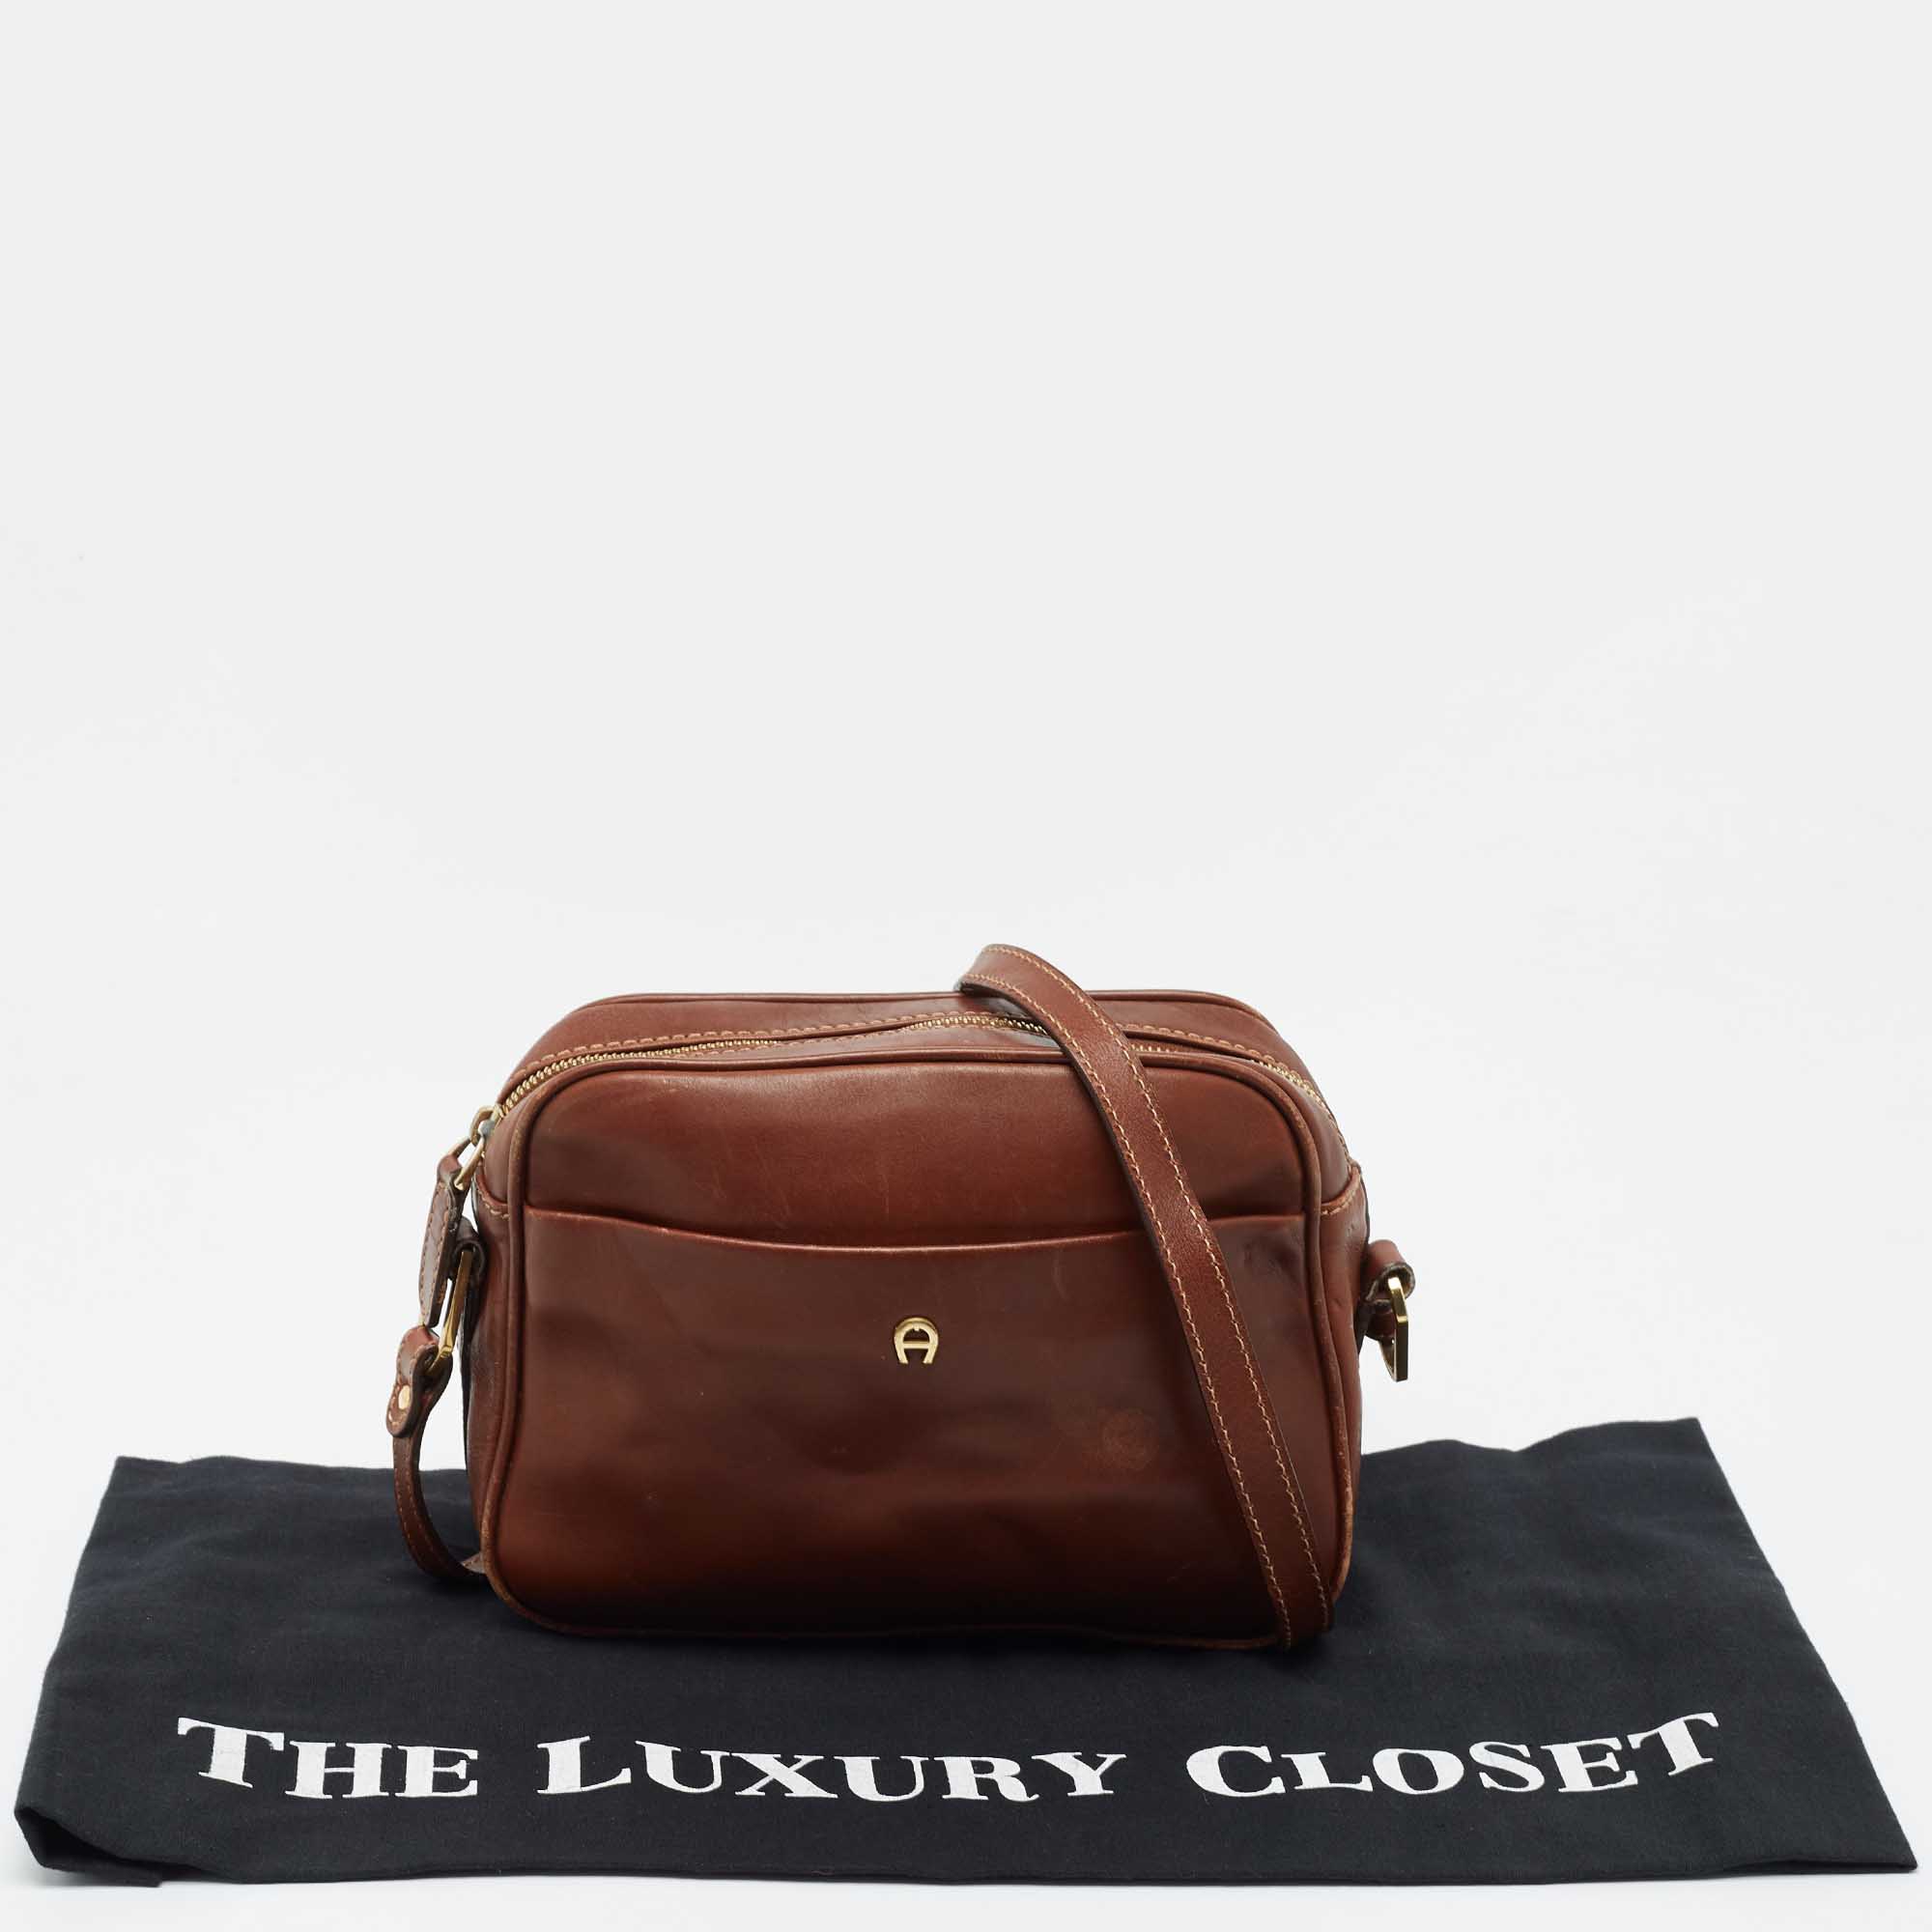 Aigner Brown Leather Crossbody Bag